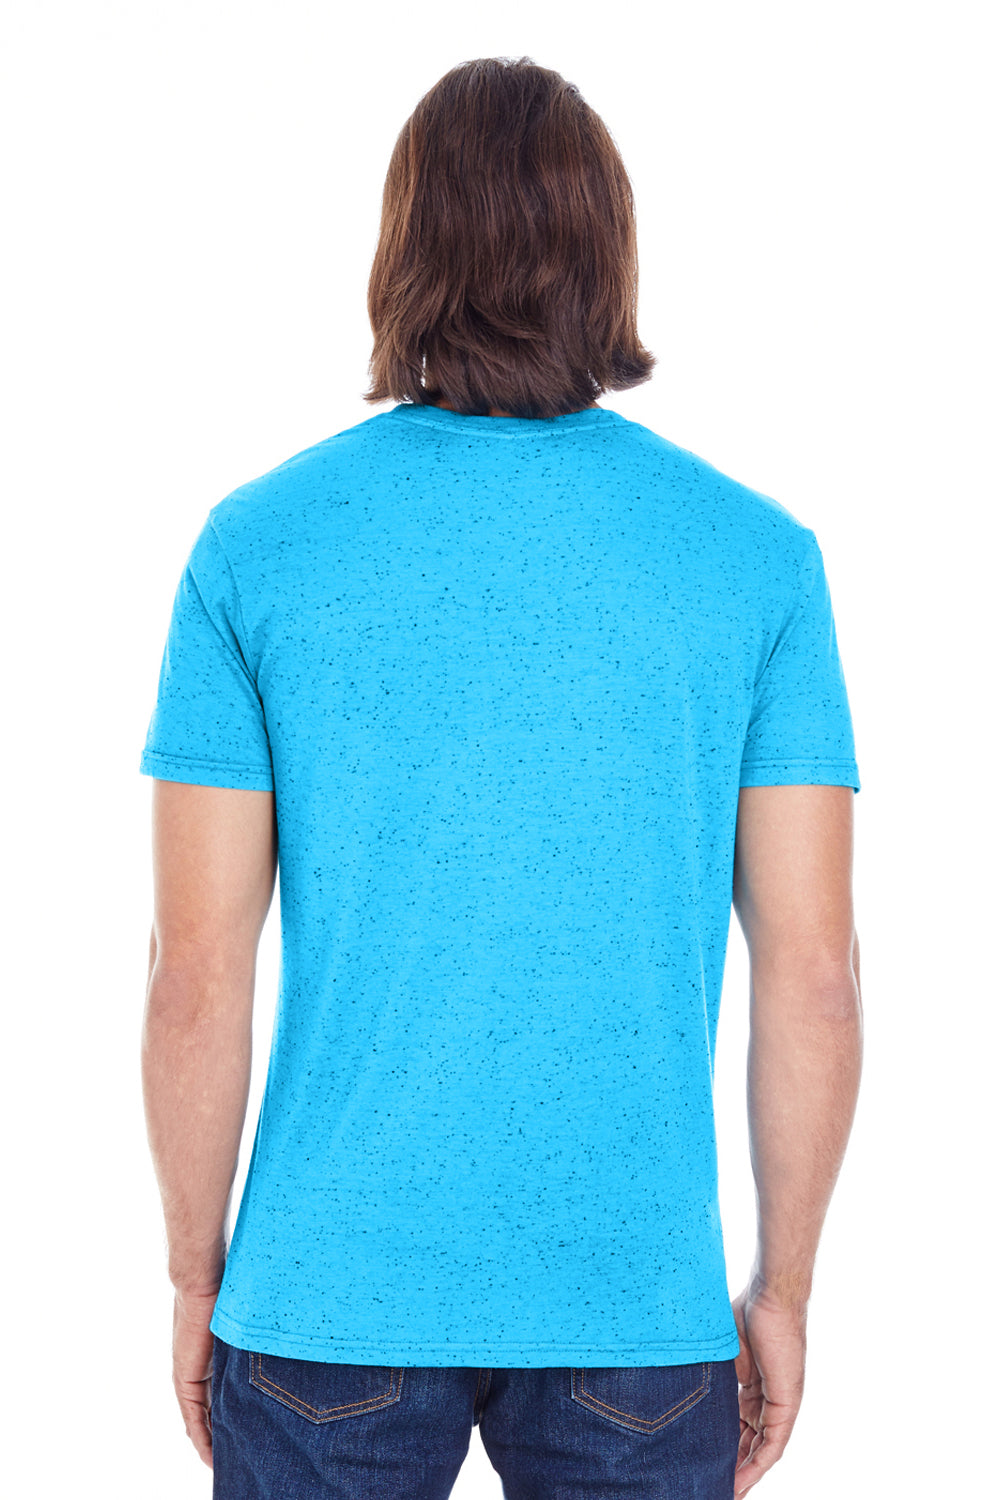 Threadfast Apparel 103A Mens Fleck Short Sleeve Crewneck T-Shirt Turquoise Blue Back